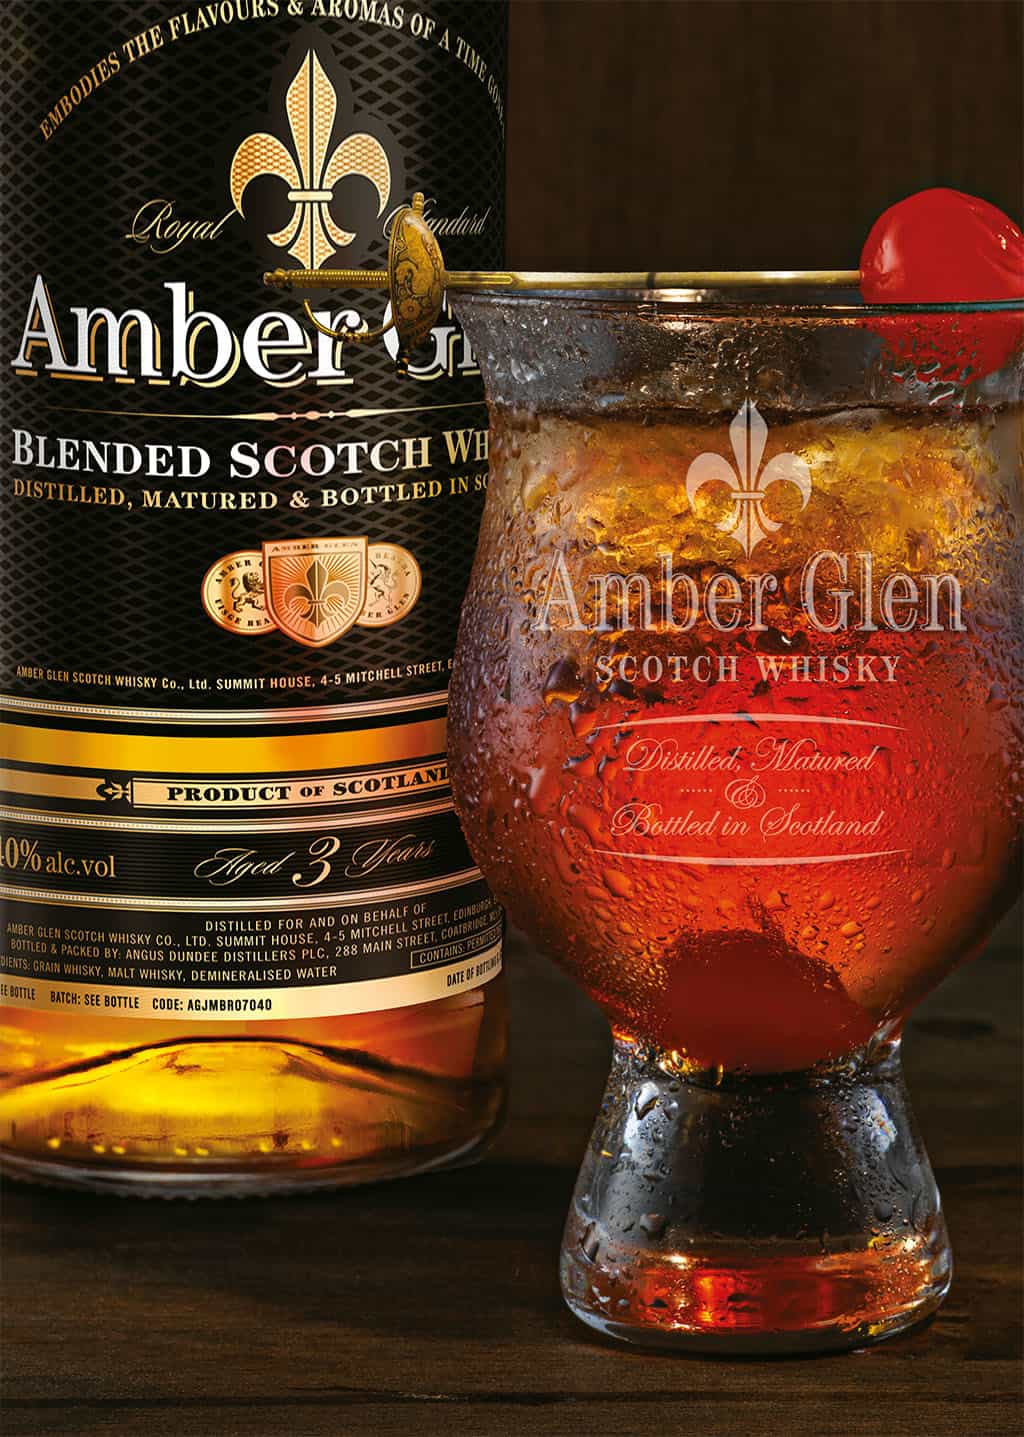 Amber Glen Scotch Whisky Nosing Goblet - Amber Glen Scotch Whisky Co., Ltd